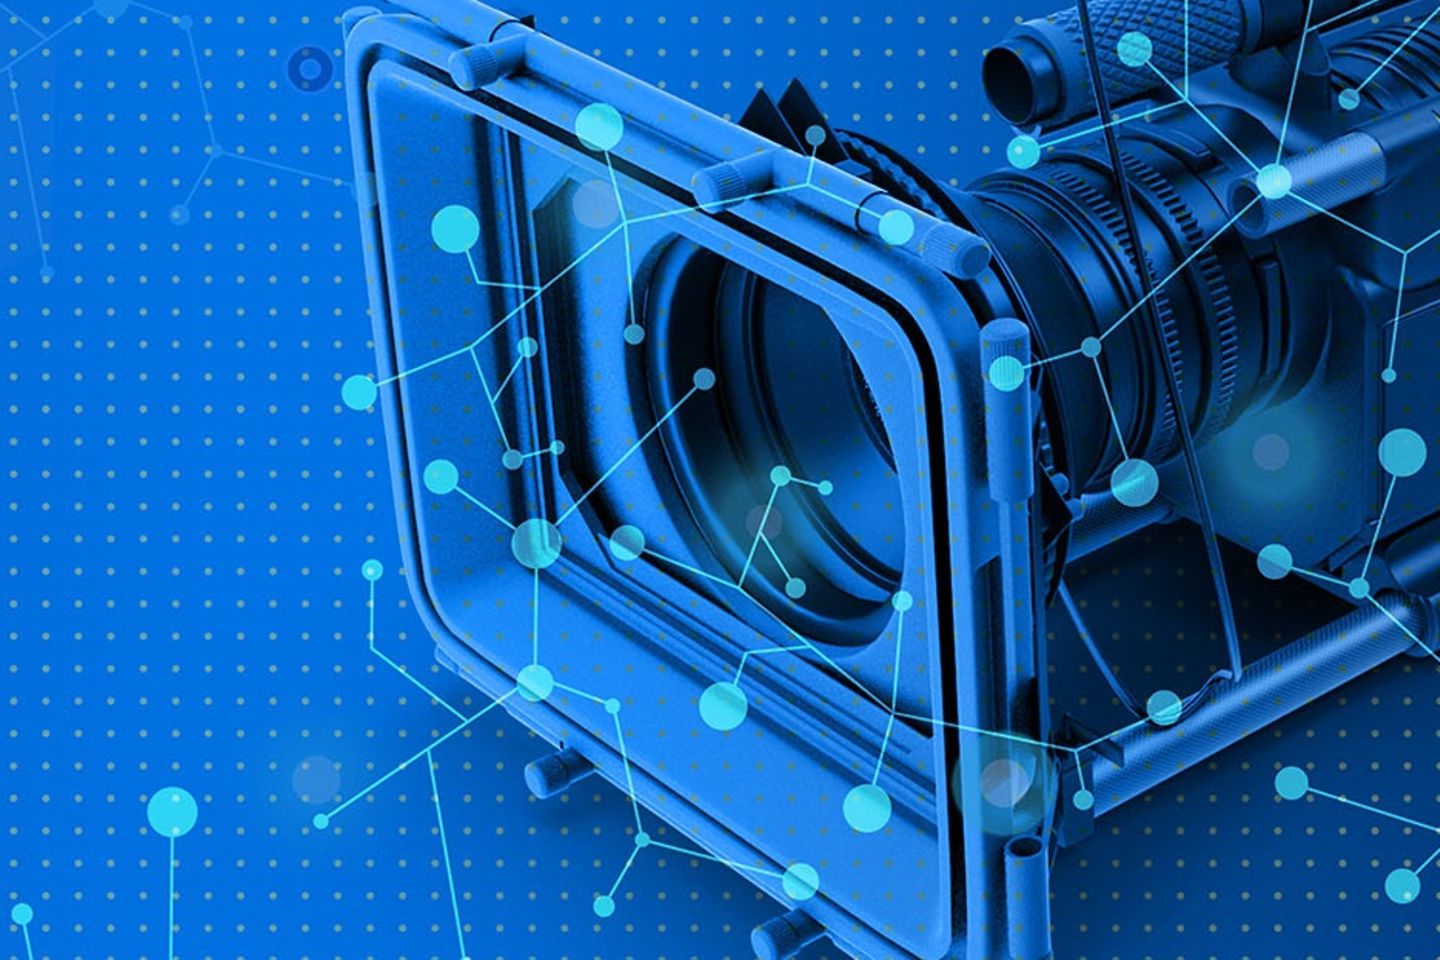 A film camera against a blue background.